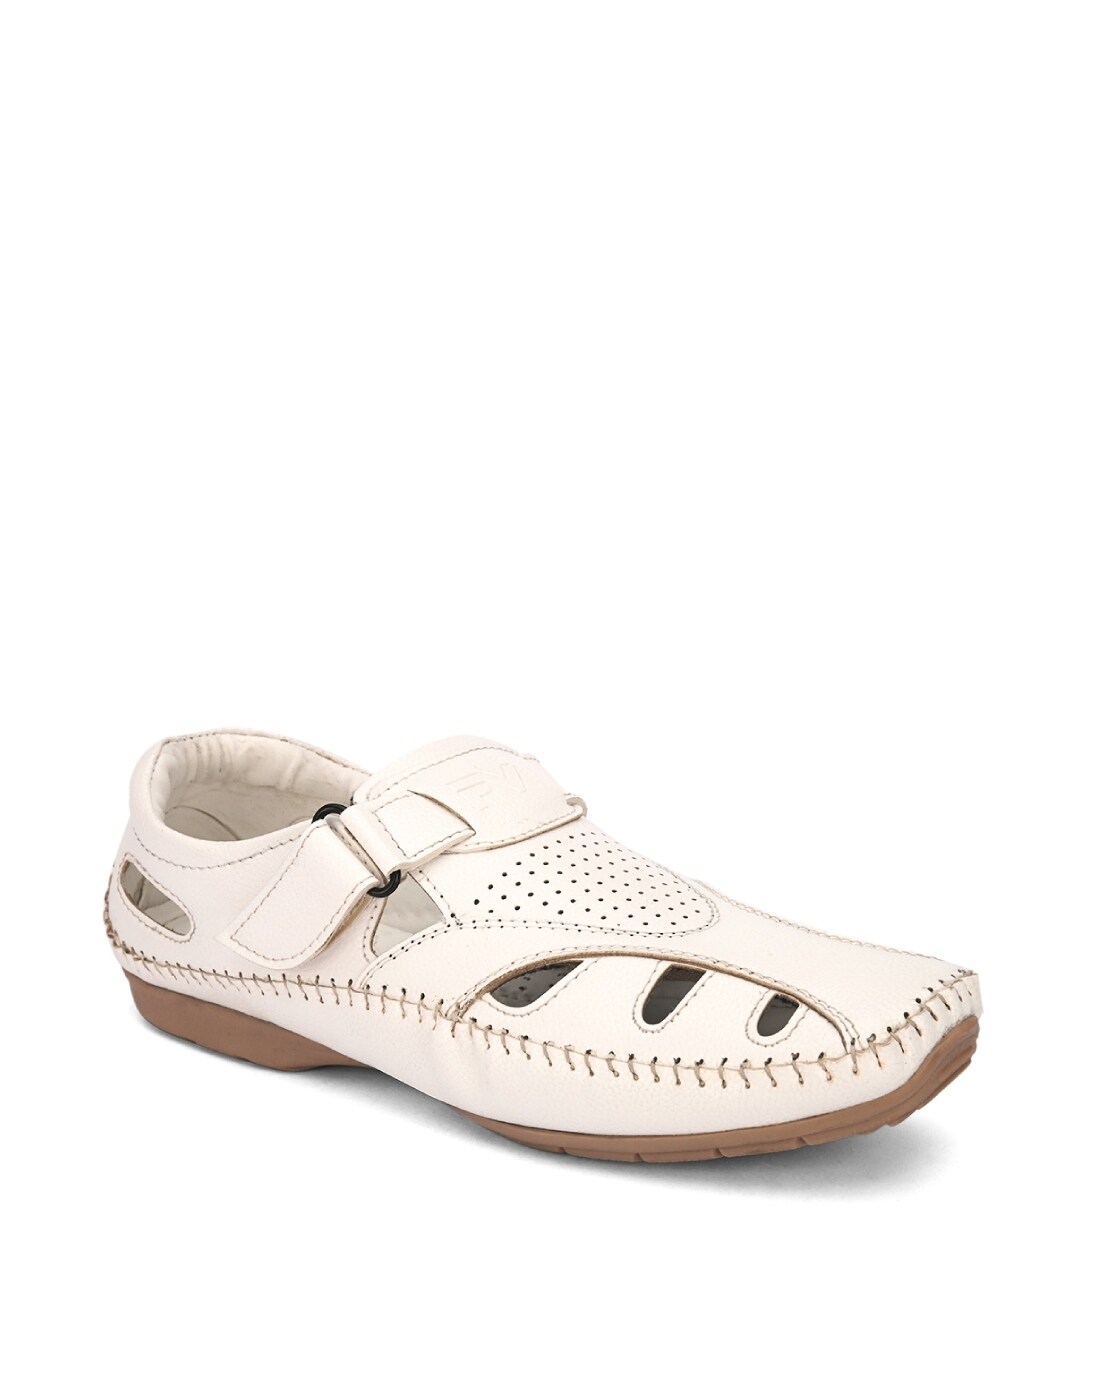 up-0727j stylish high heel sandals wholesale| Alibaba.com